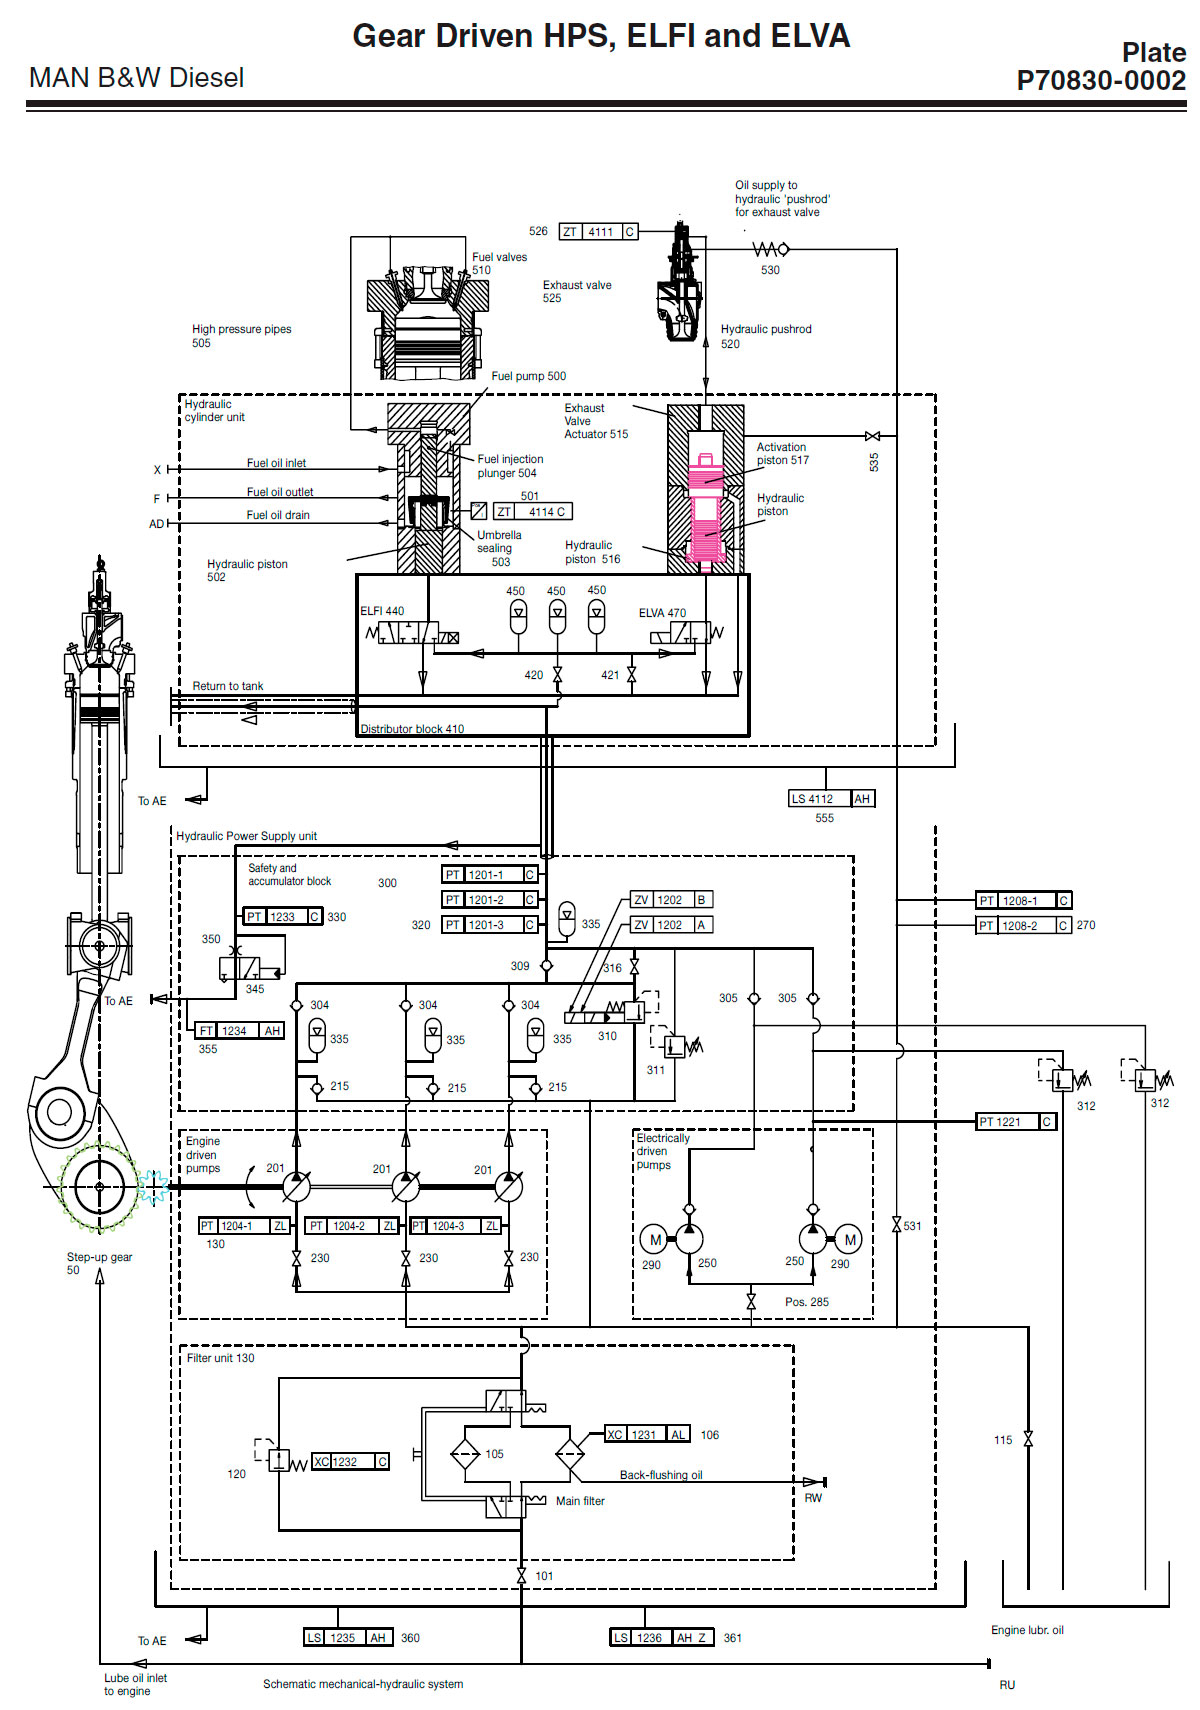 Schematic mechanical-hydraulic system